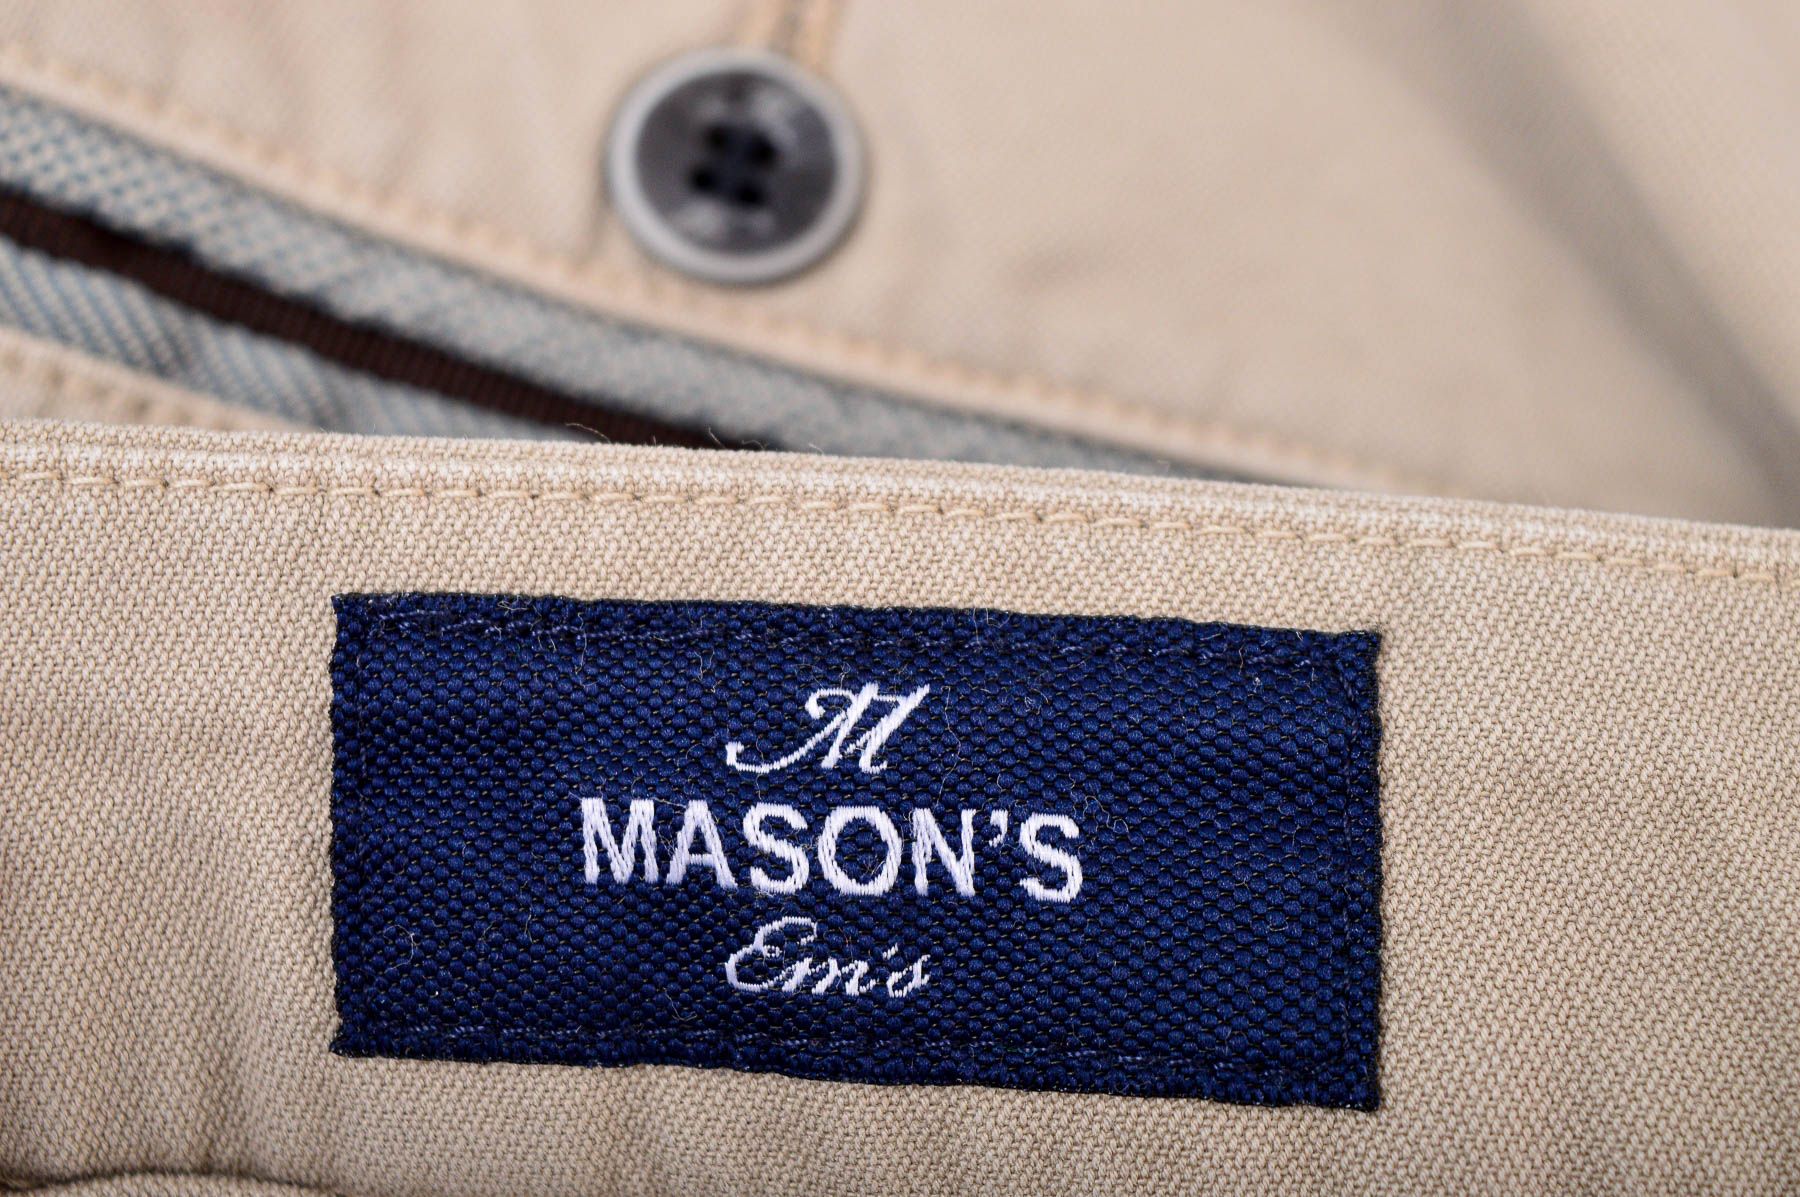 Men's trousers - Mason's - 2